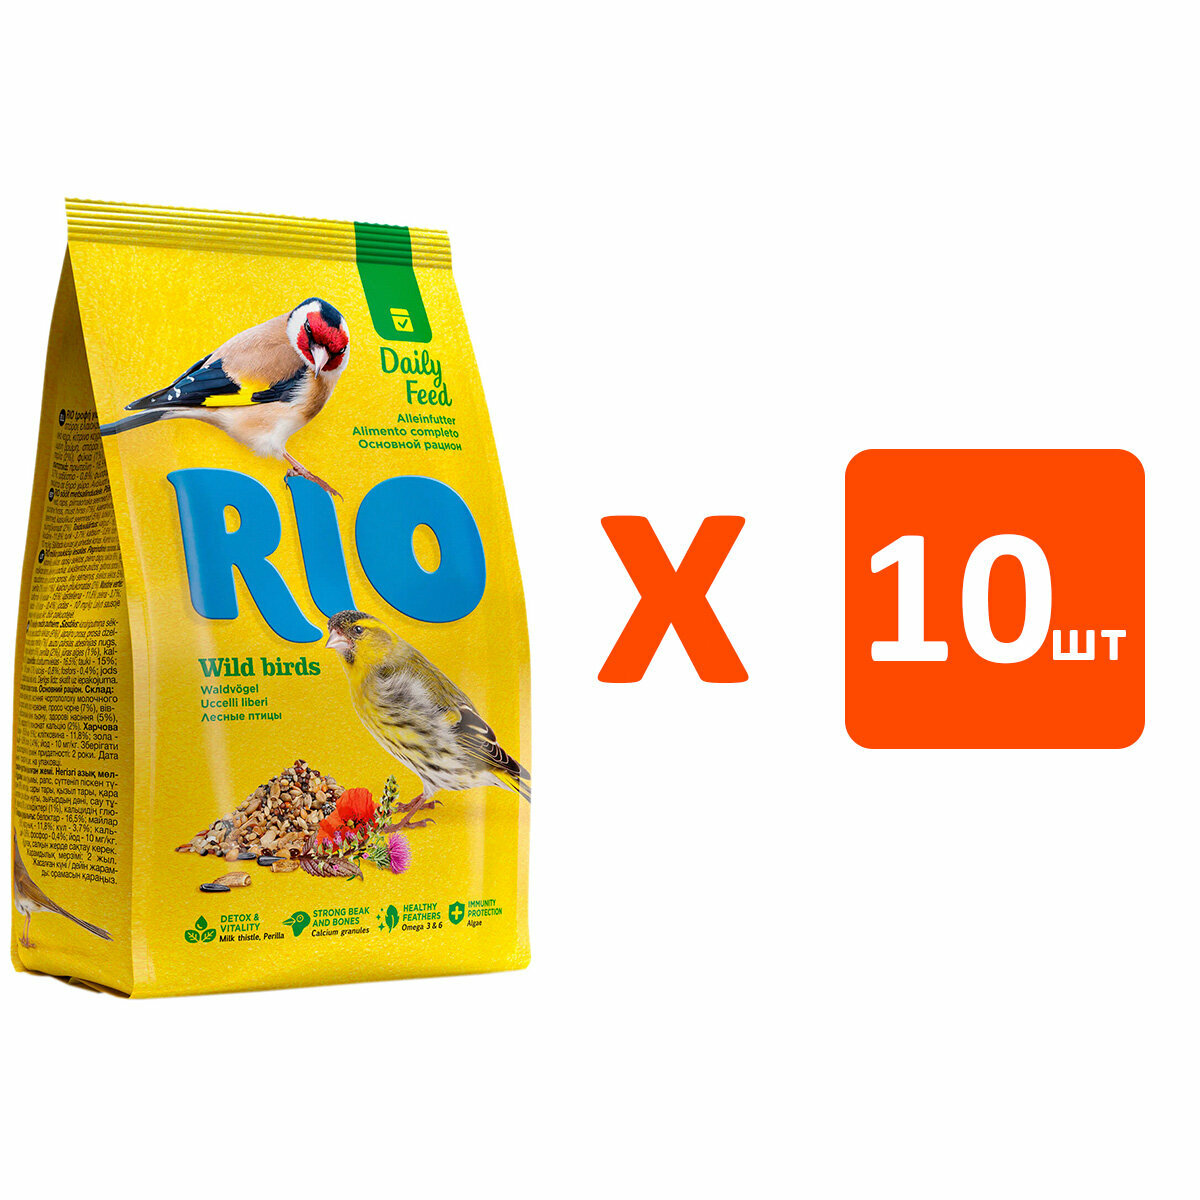 RIO WILD BIRDS – Рио корм для лесных птиц (500 гр х 10 шт)